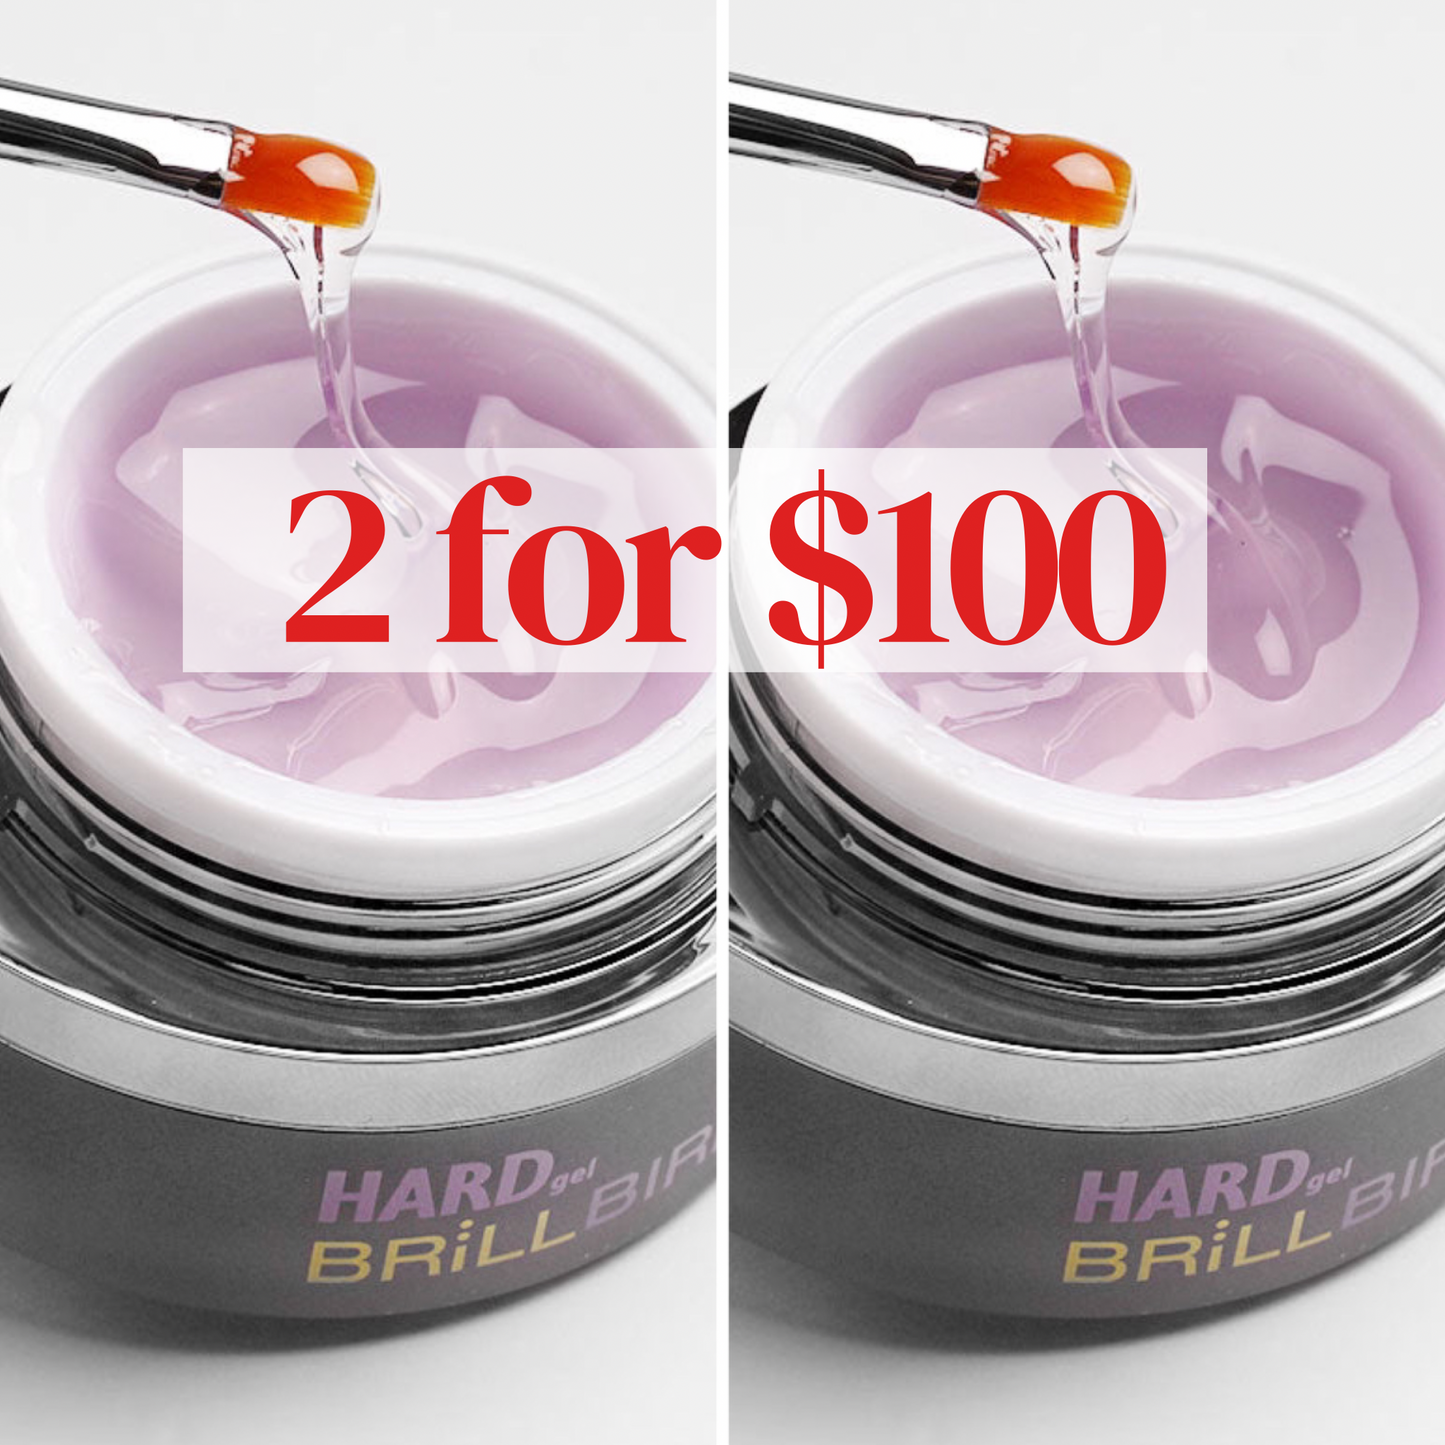 Hard gel 50ml duo (2 for $100)